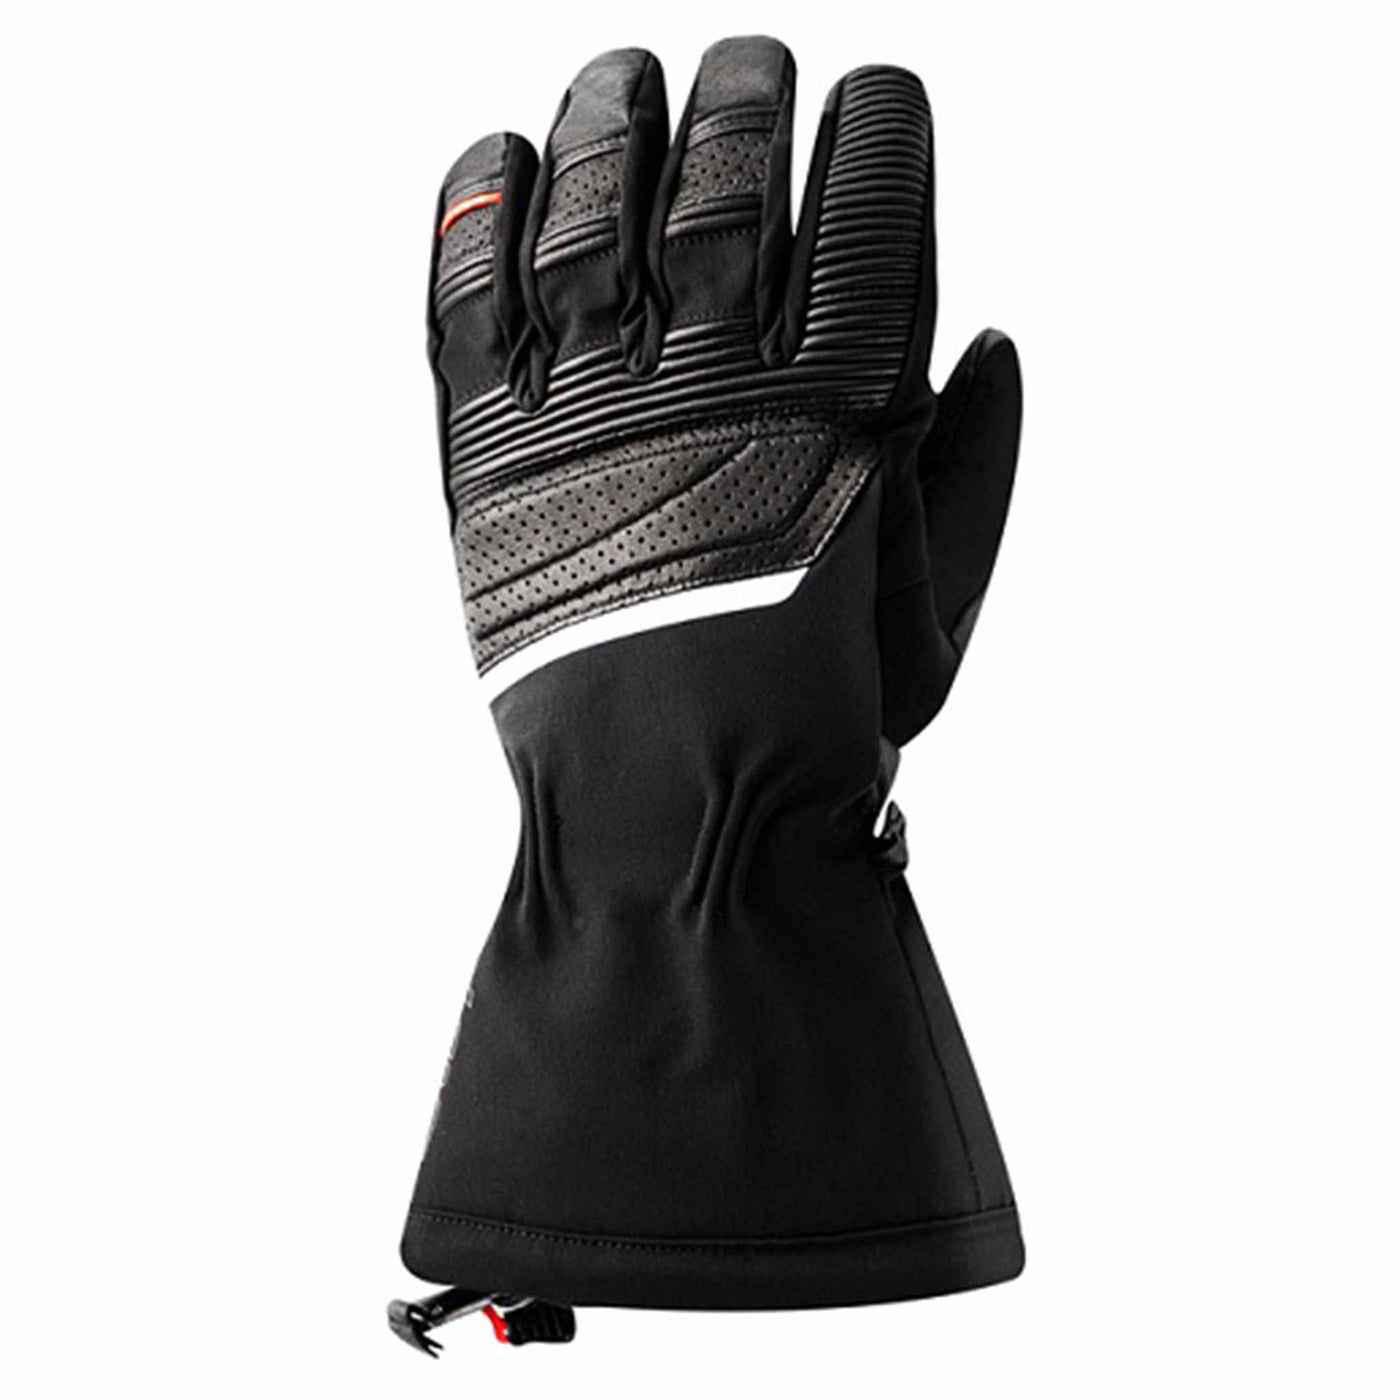 Gants chauffants Lenz Heat Glove 6.0 Finger (hommes) SANS AKKU